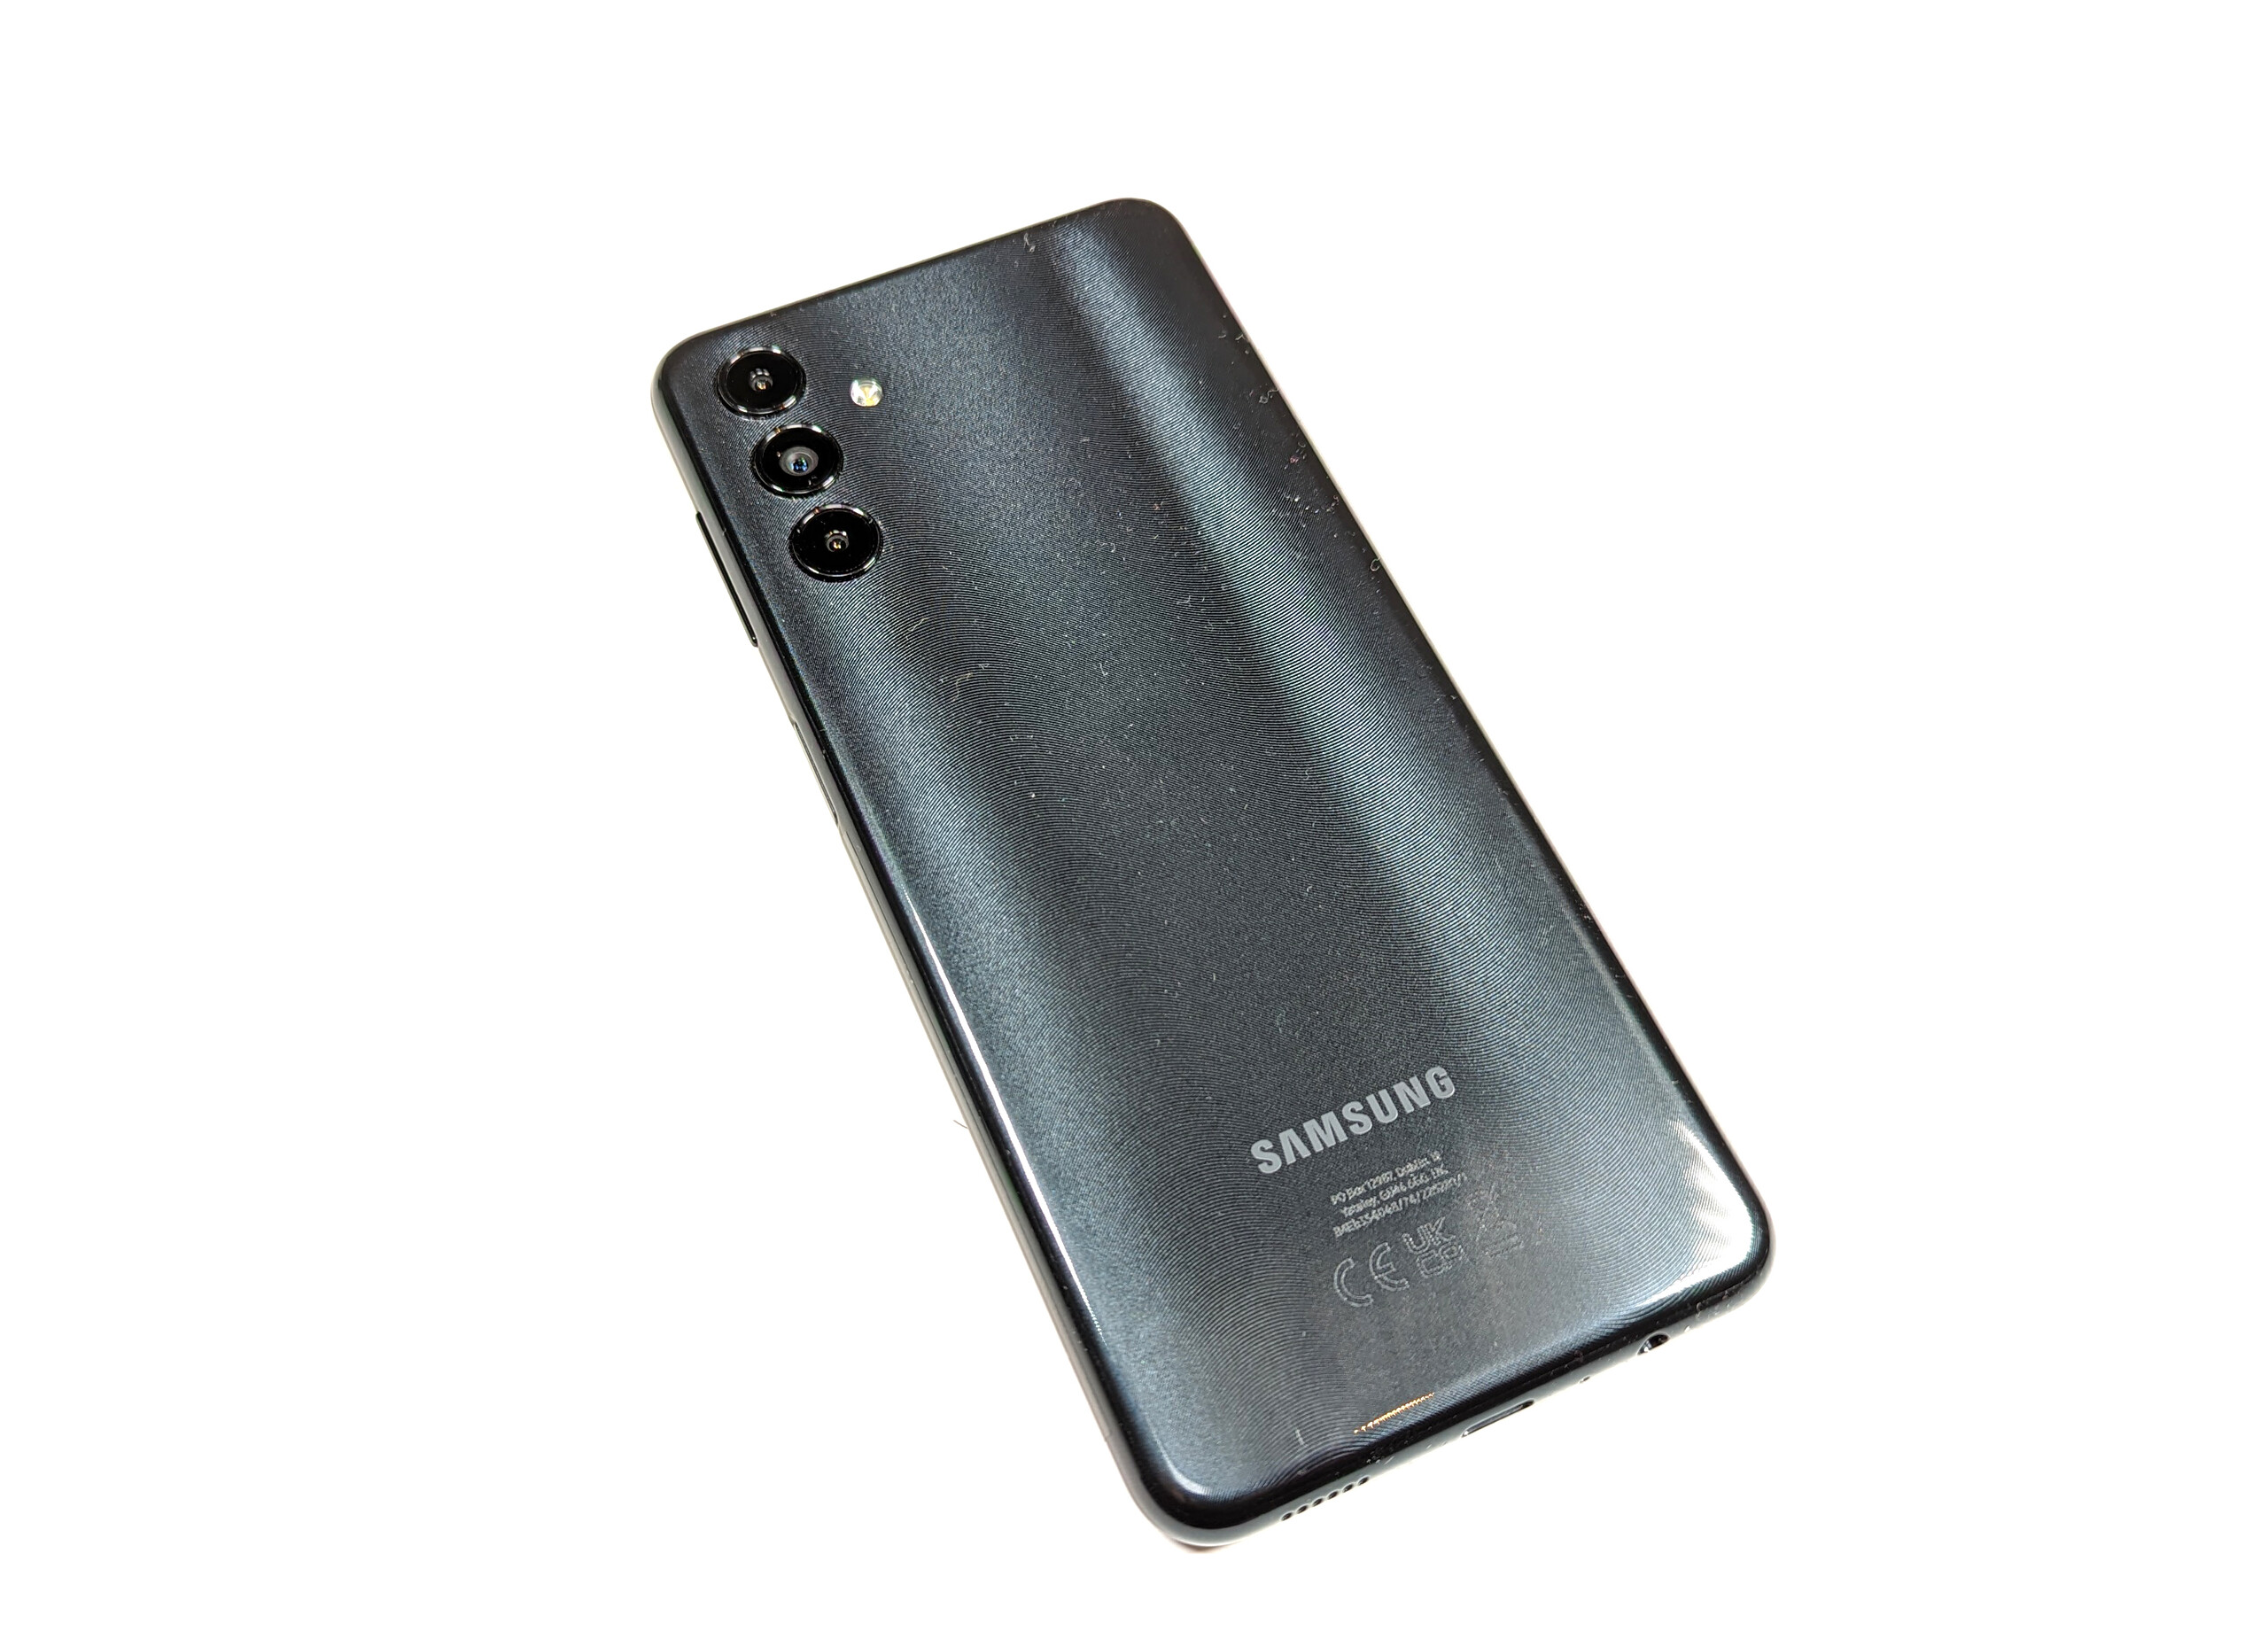 Samsung Galaxy A04s Dual Sim Green - Incredible Connection